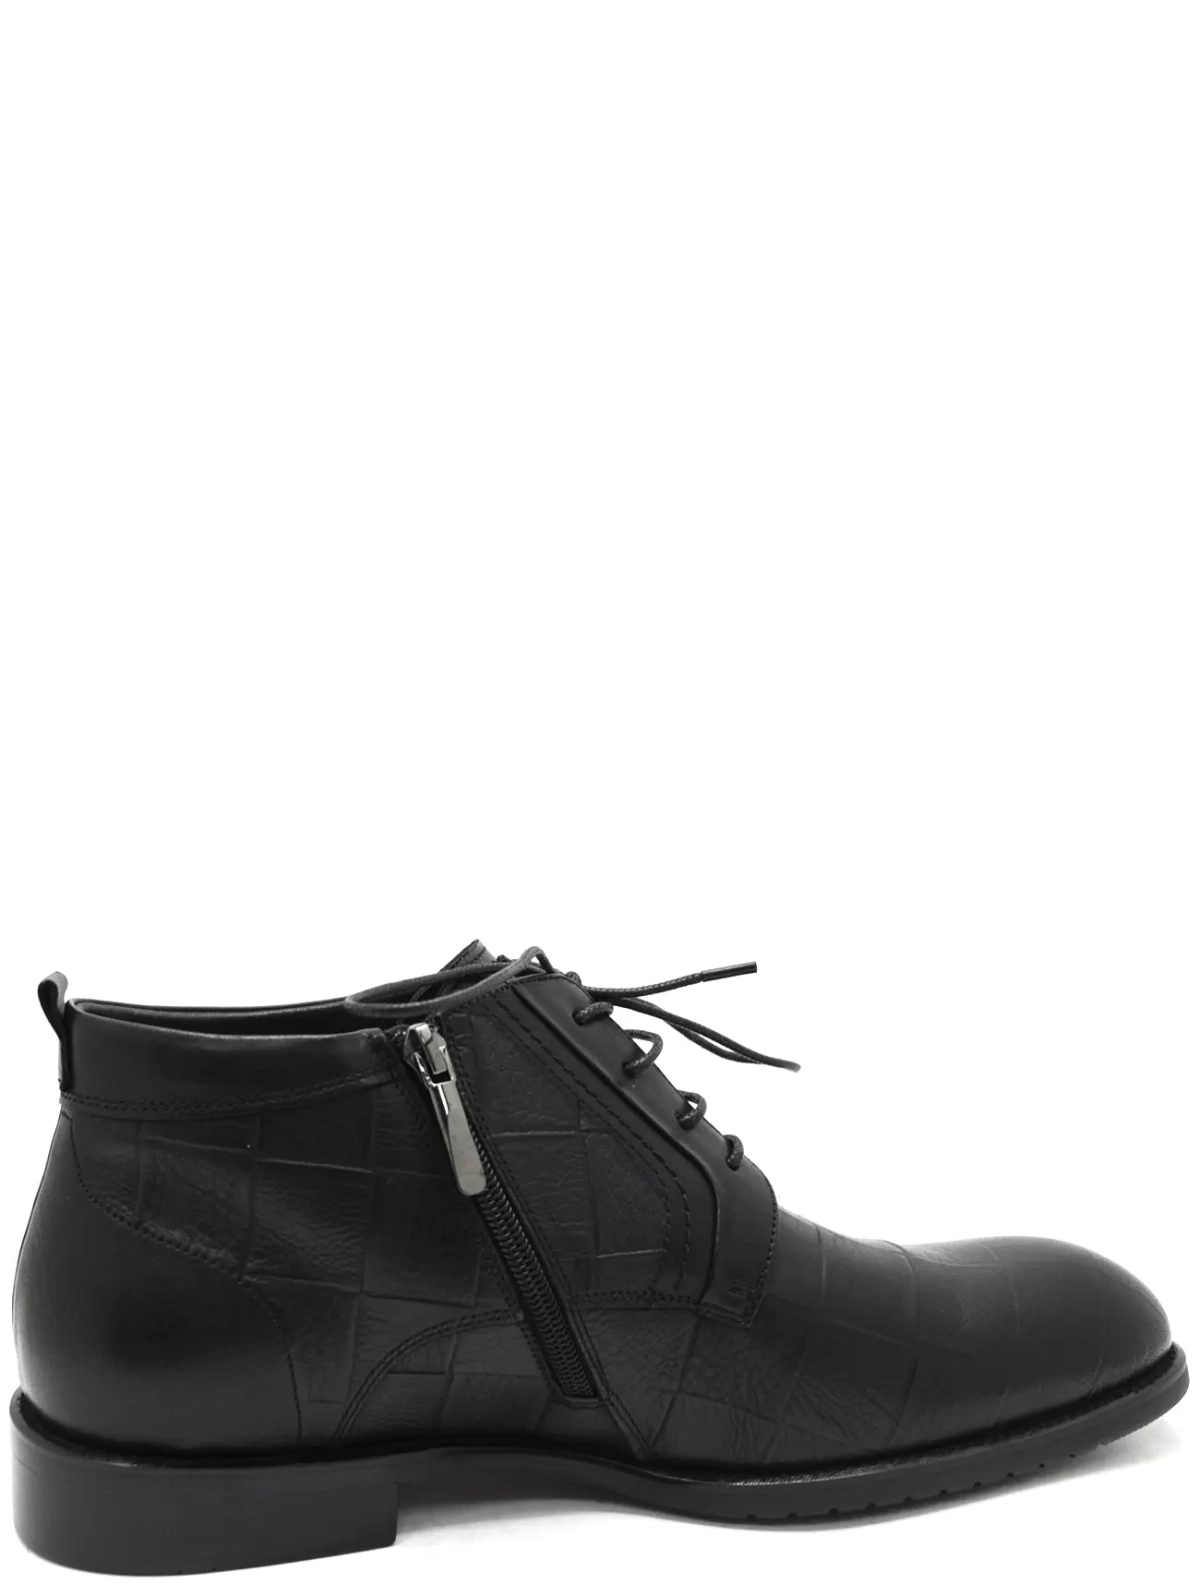 Roscote FH42R-S02-HB1-T5434 мужские ботинки